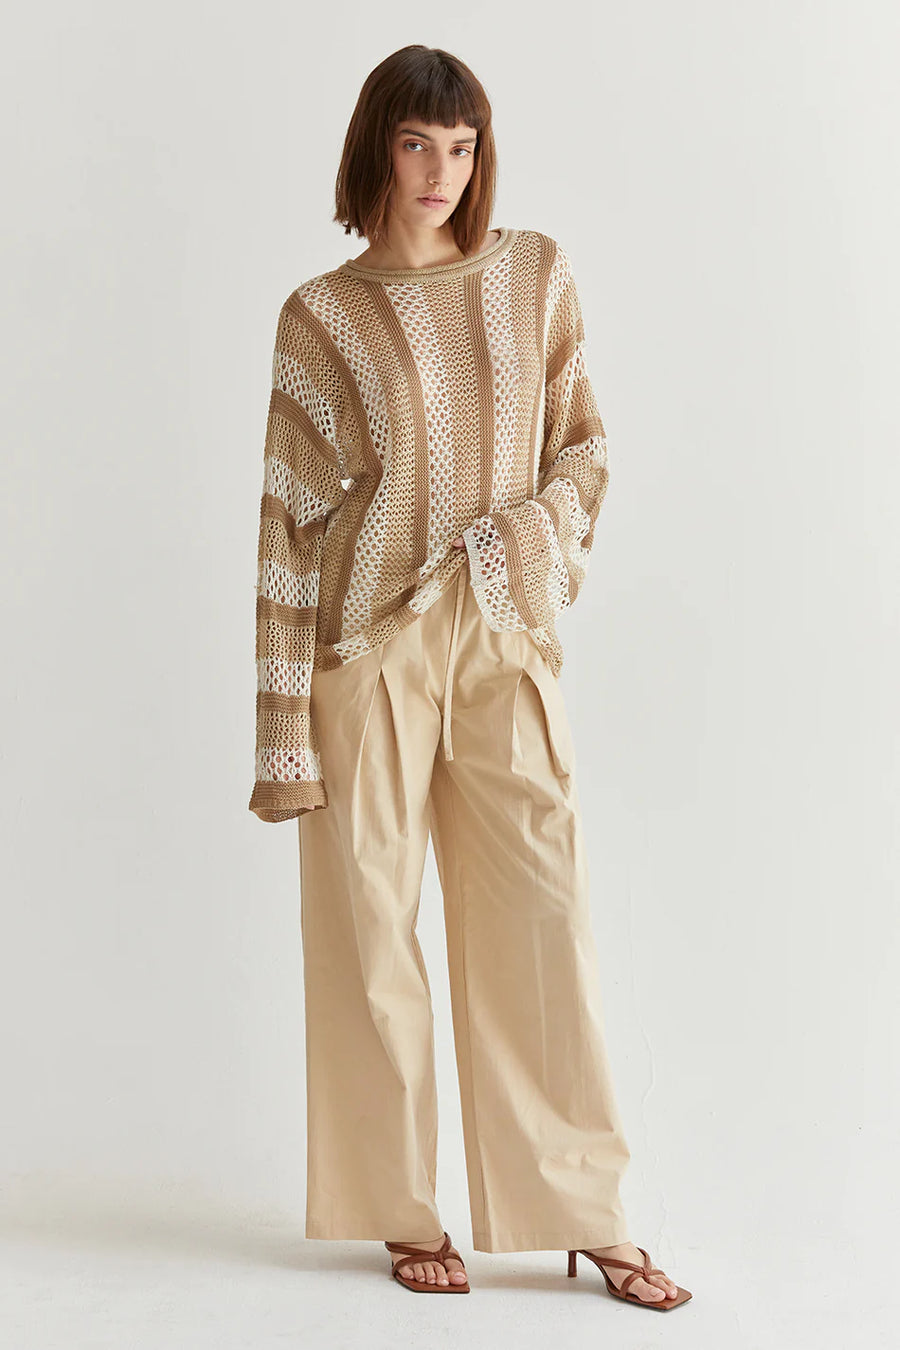 Sadie Crochet Pullover